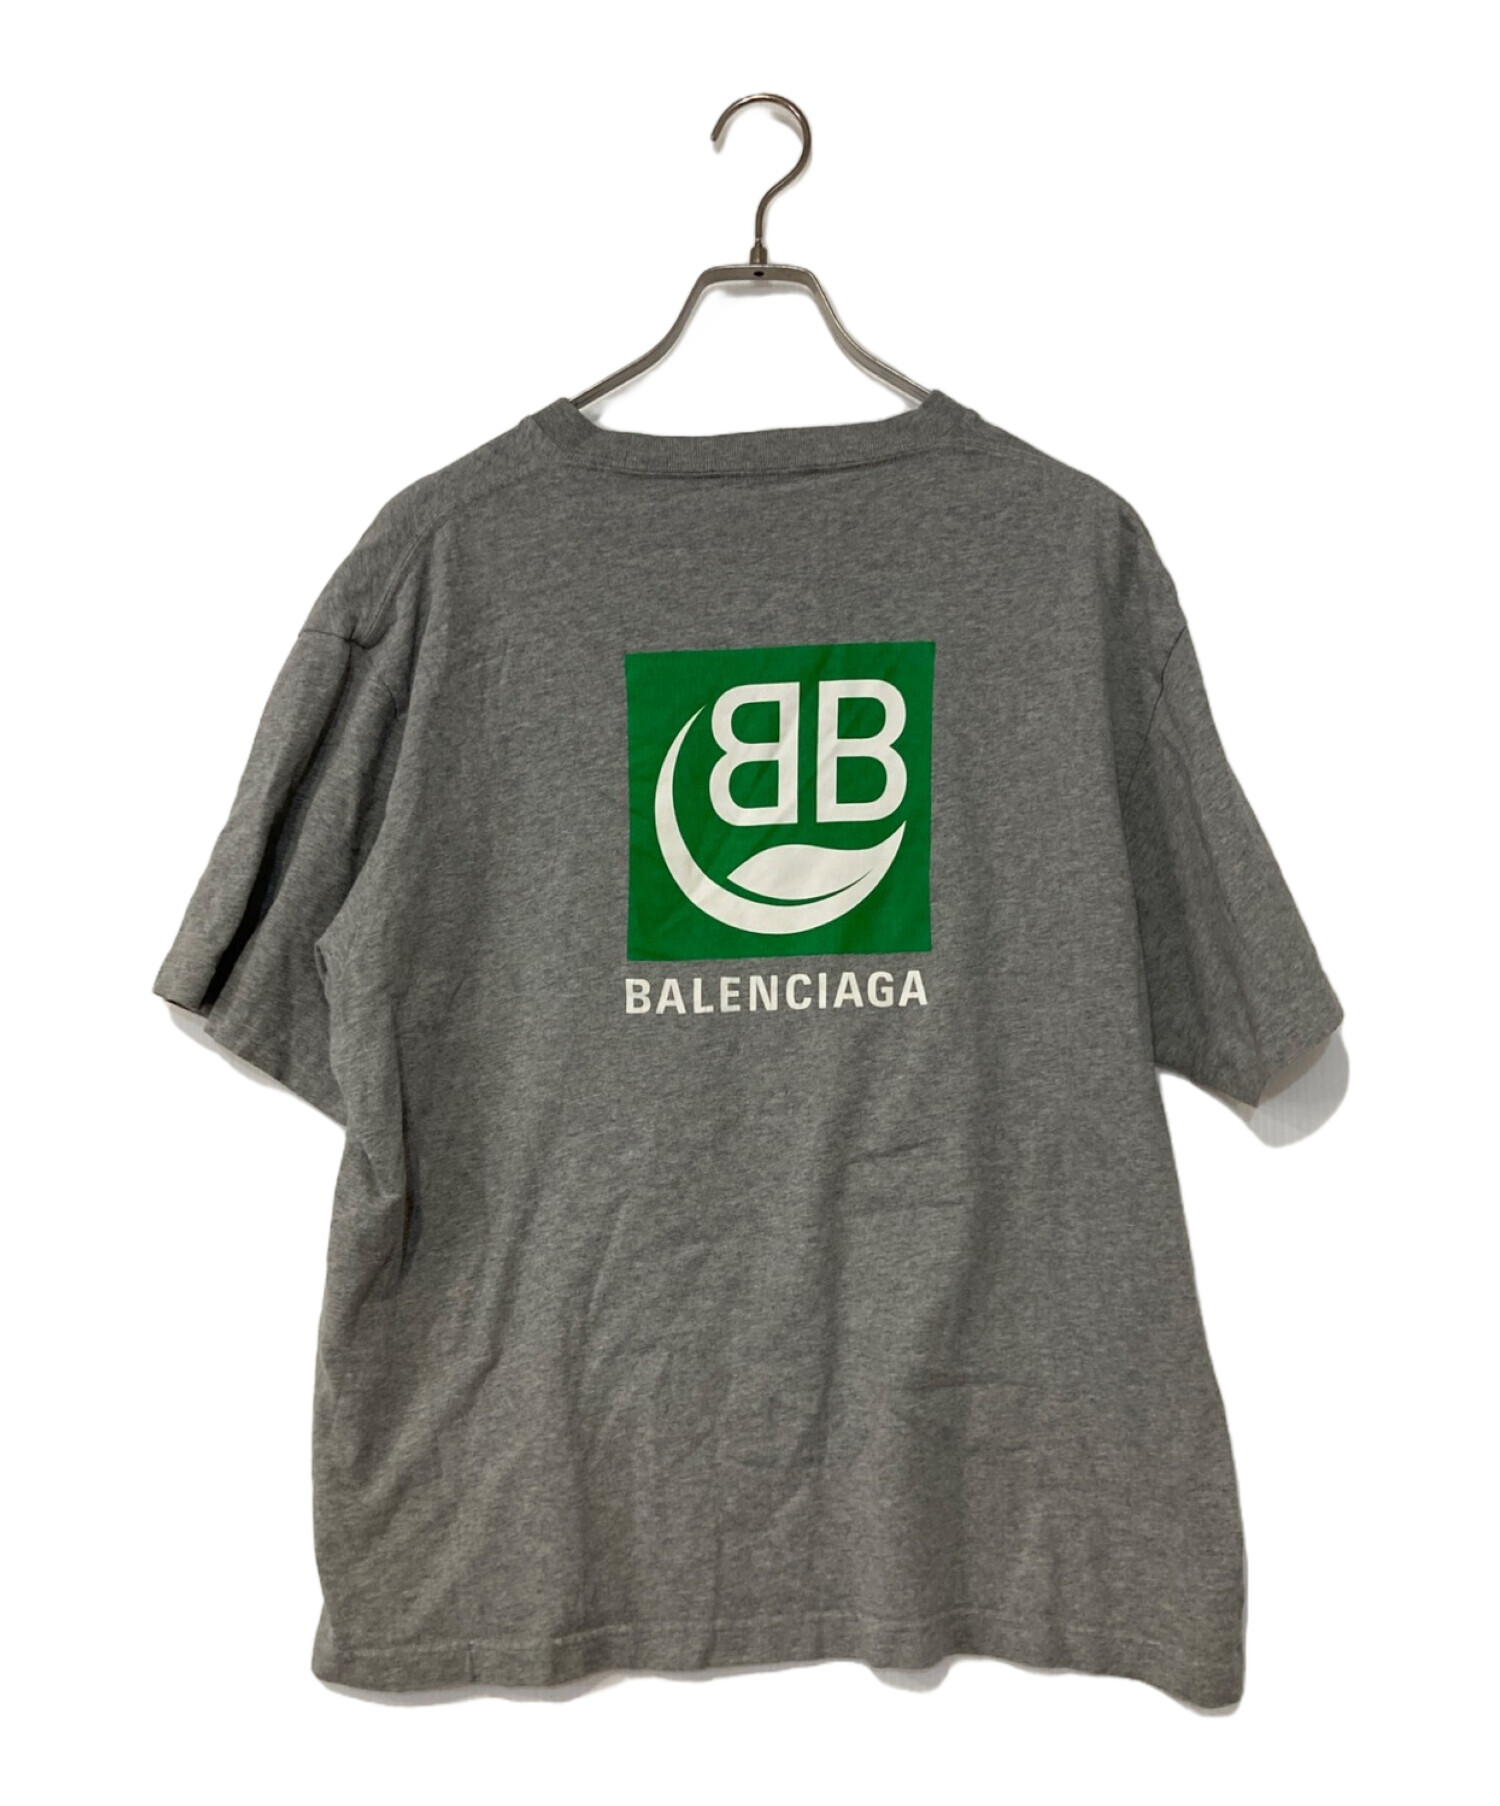 BALENCIAGA (バレンシアガ) BB Logo Printed Tee グレー サイズ:S